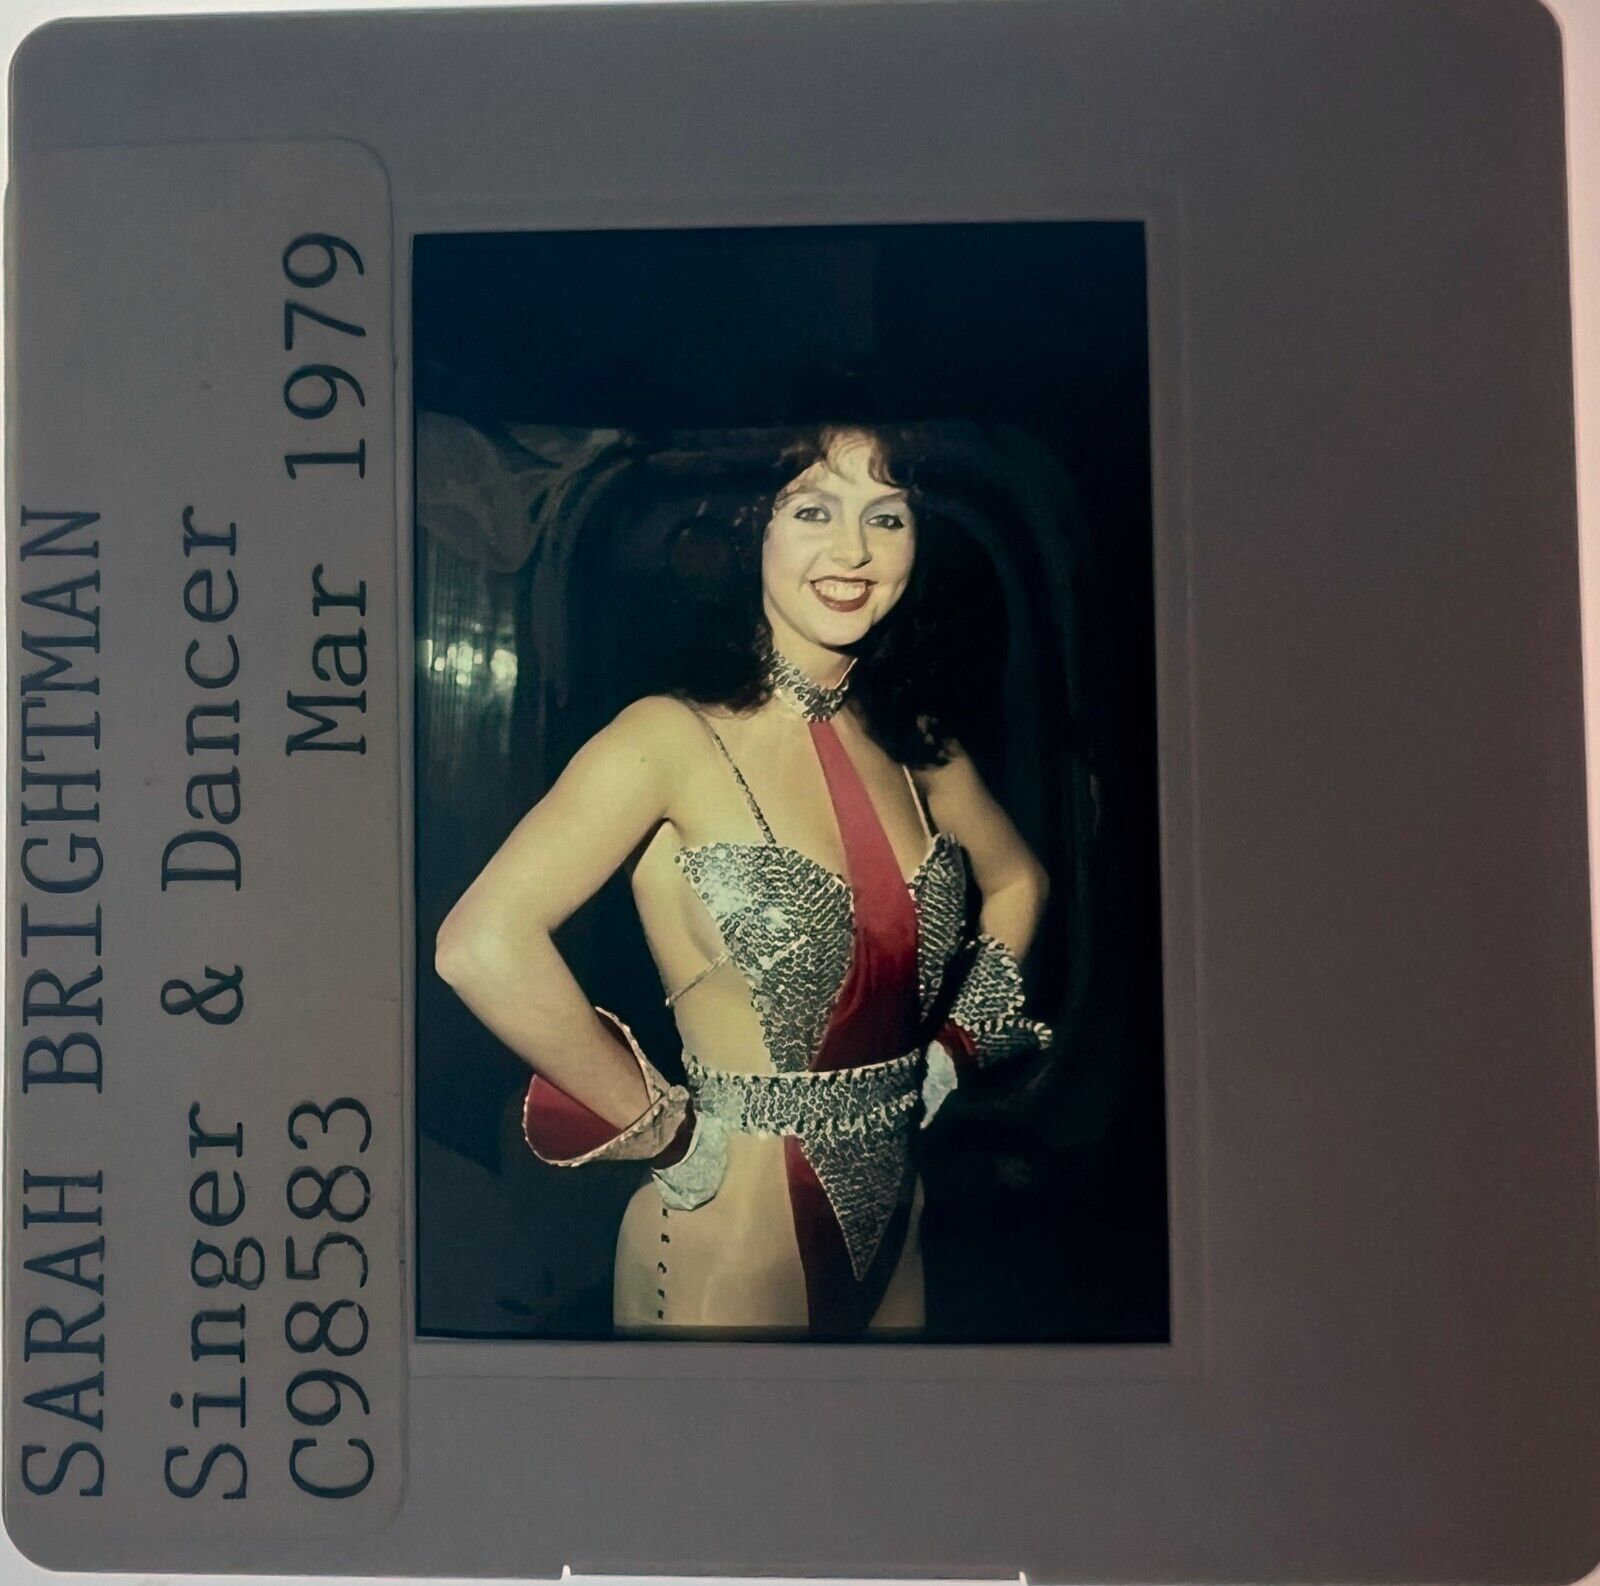 UK1-1710 Sarah Brightman Soprano Singer Dancer Actress 35mm Color Transparency